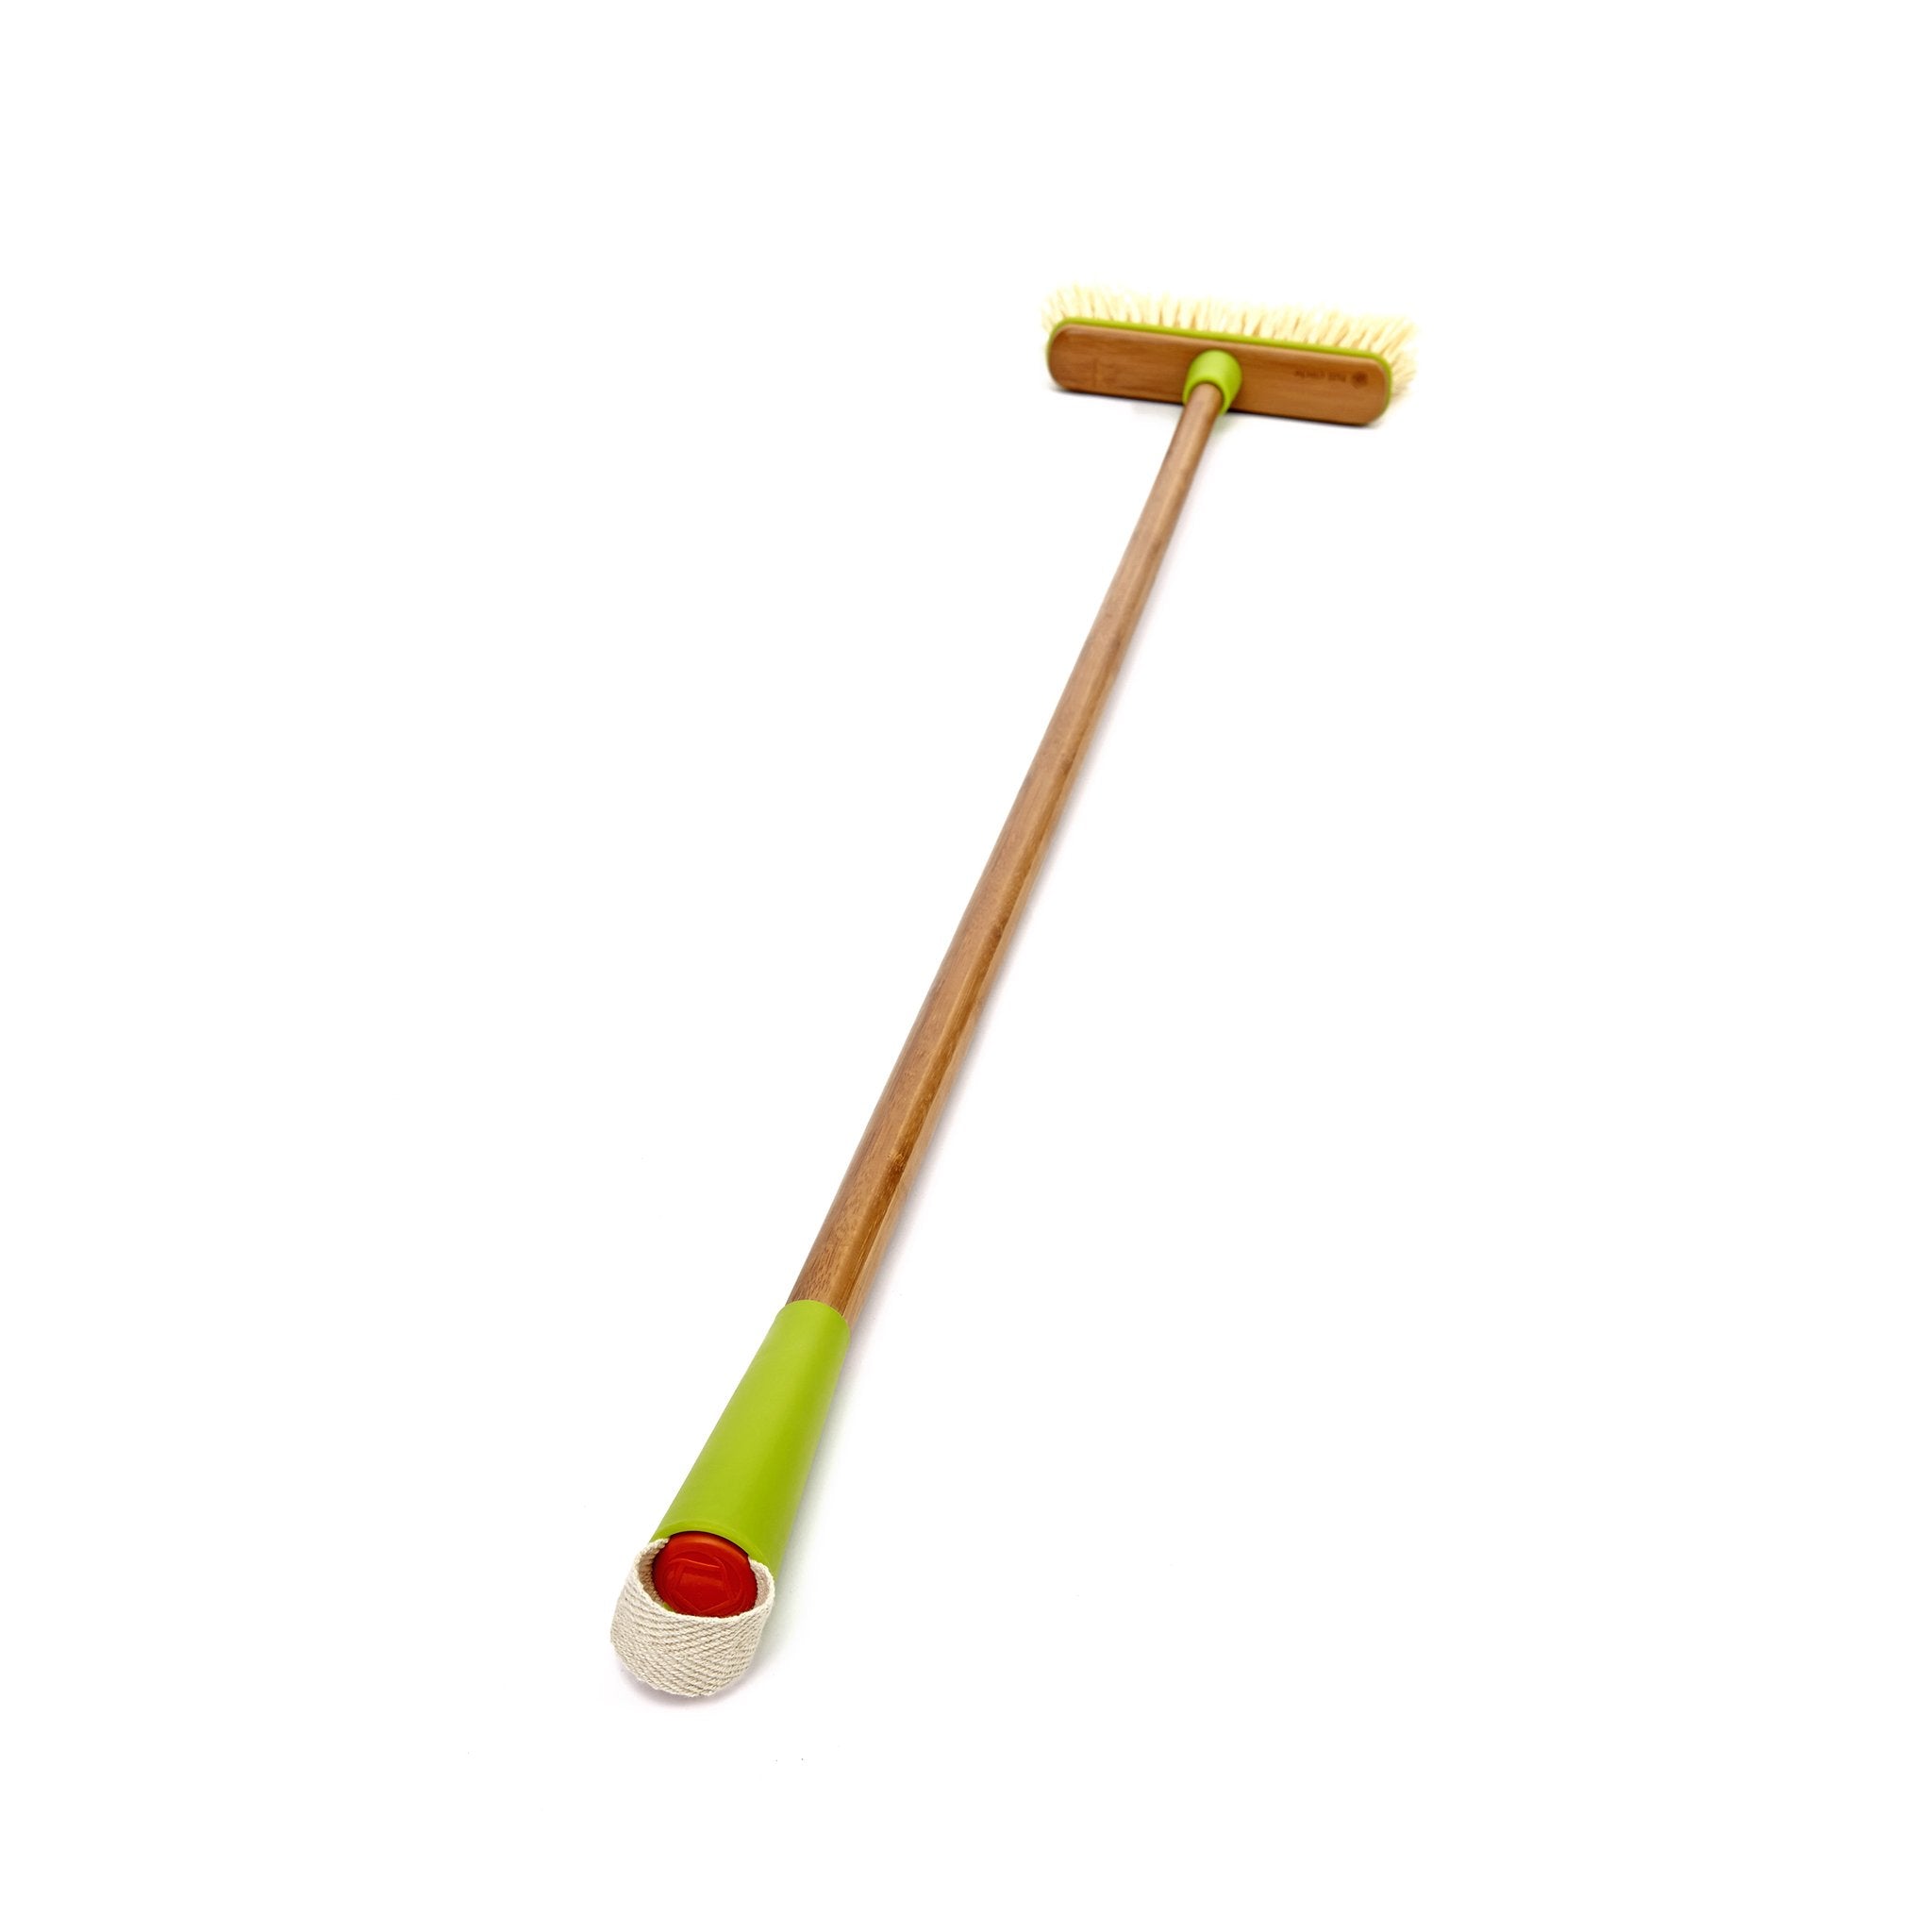 Sweep Bamboo Broom | 8.67"W x 50.99"H